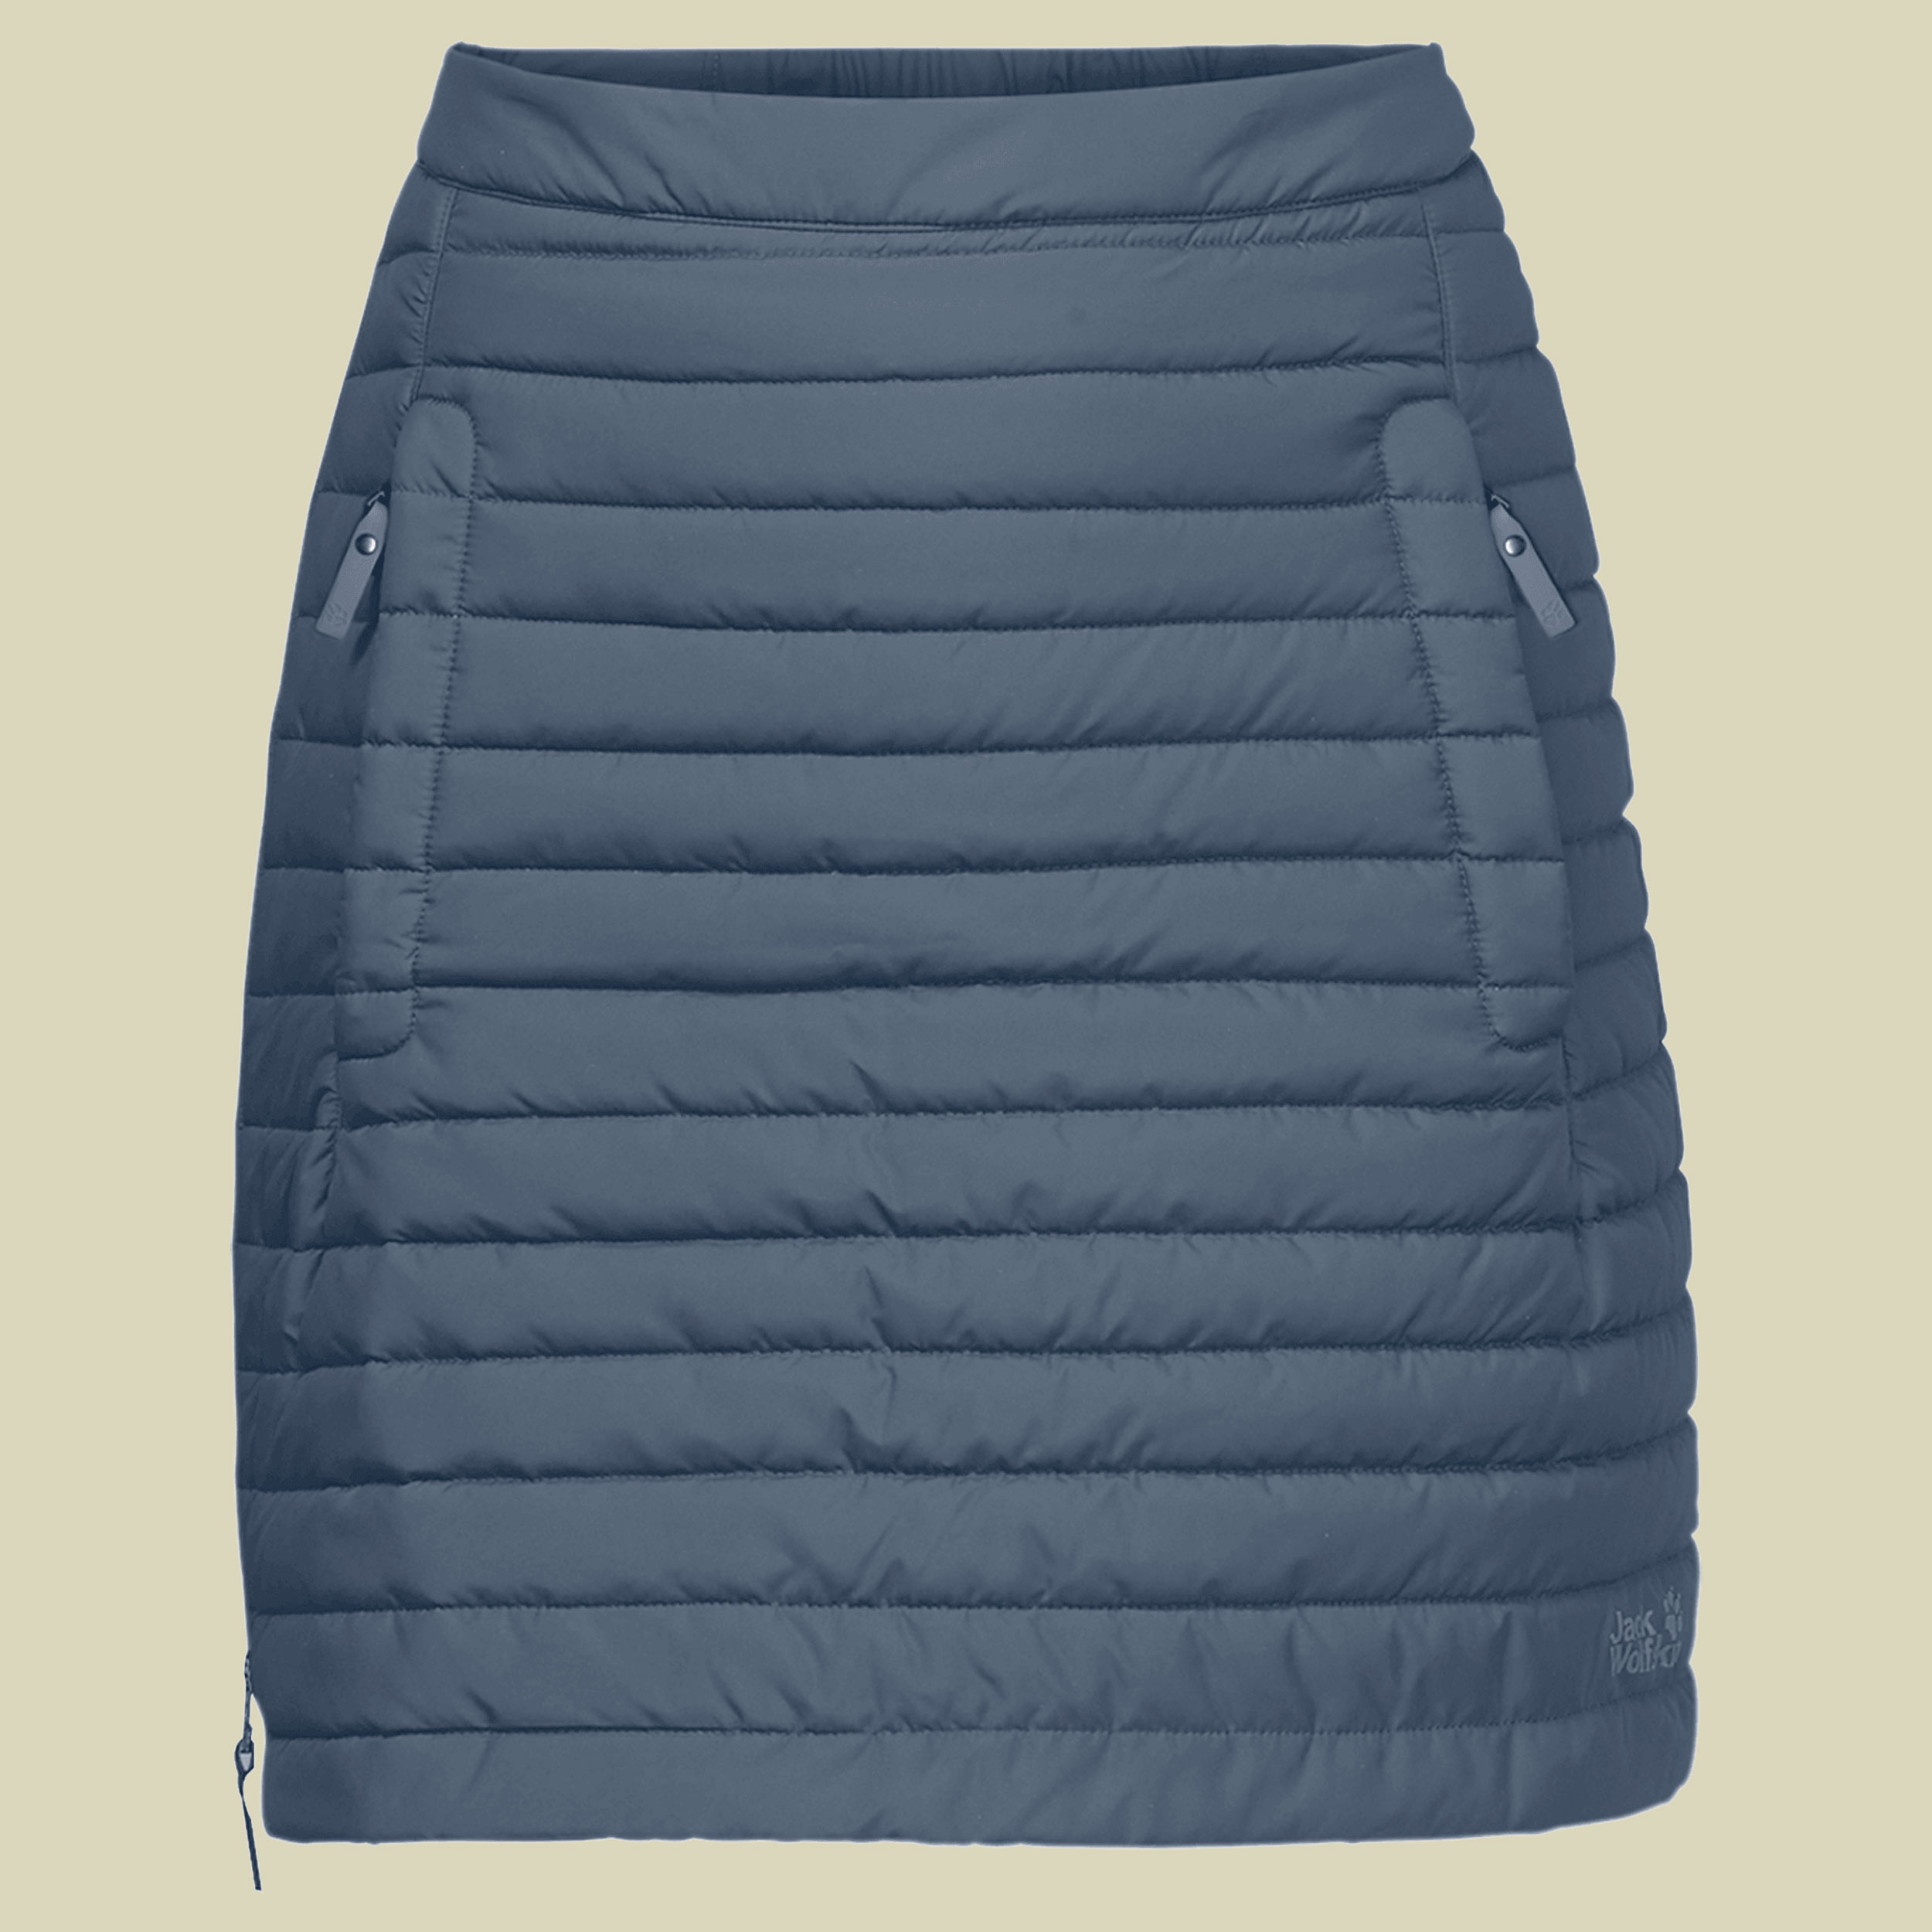 Iceguard Skirt  Größe S Farbe frost blue